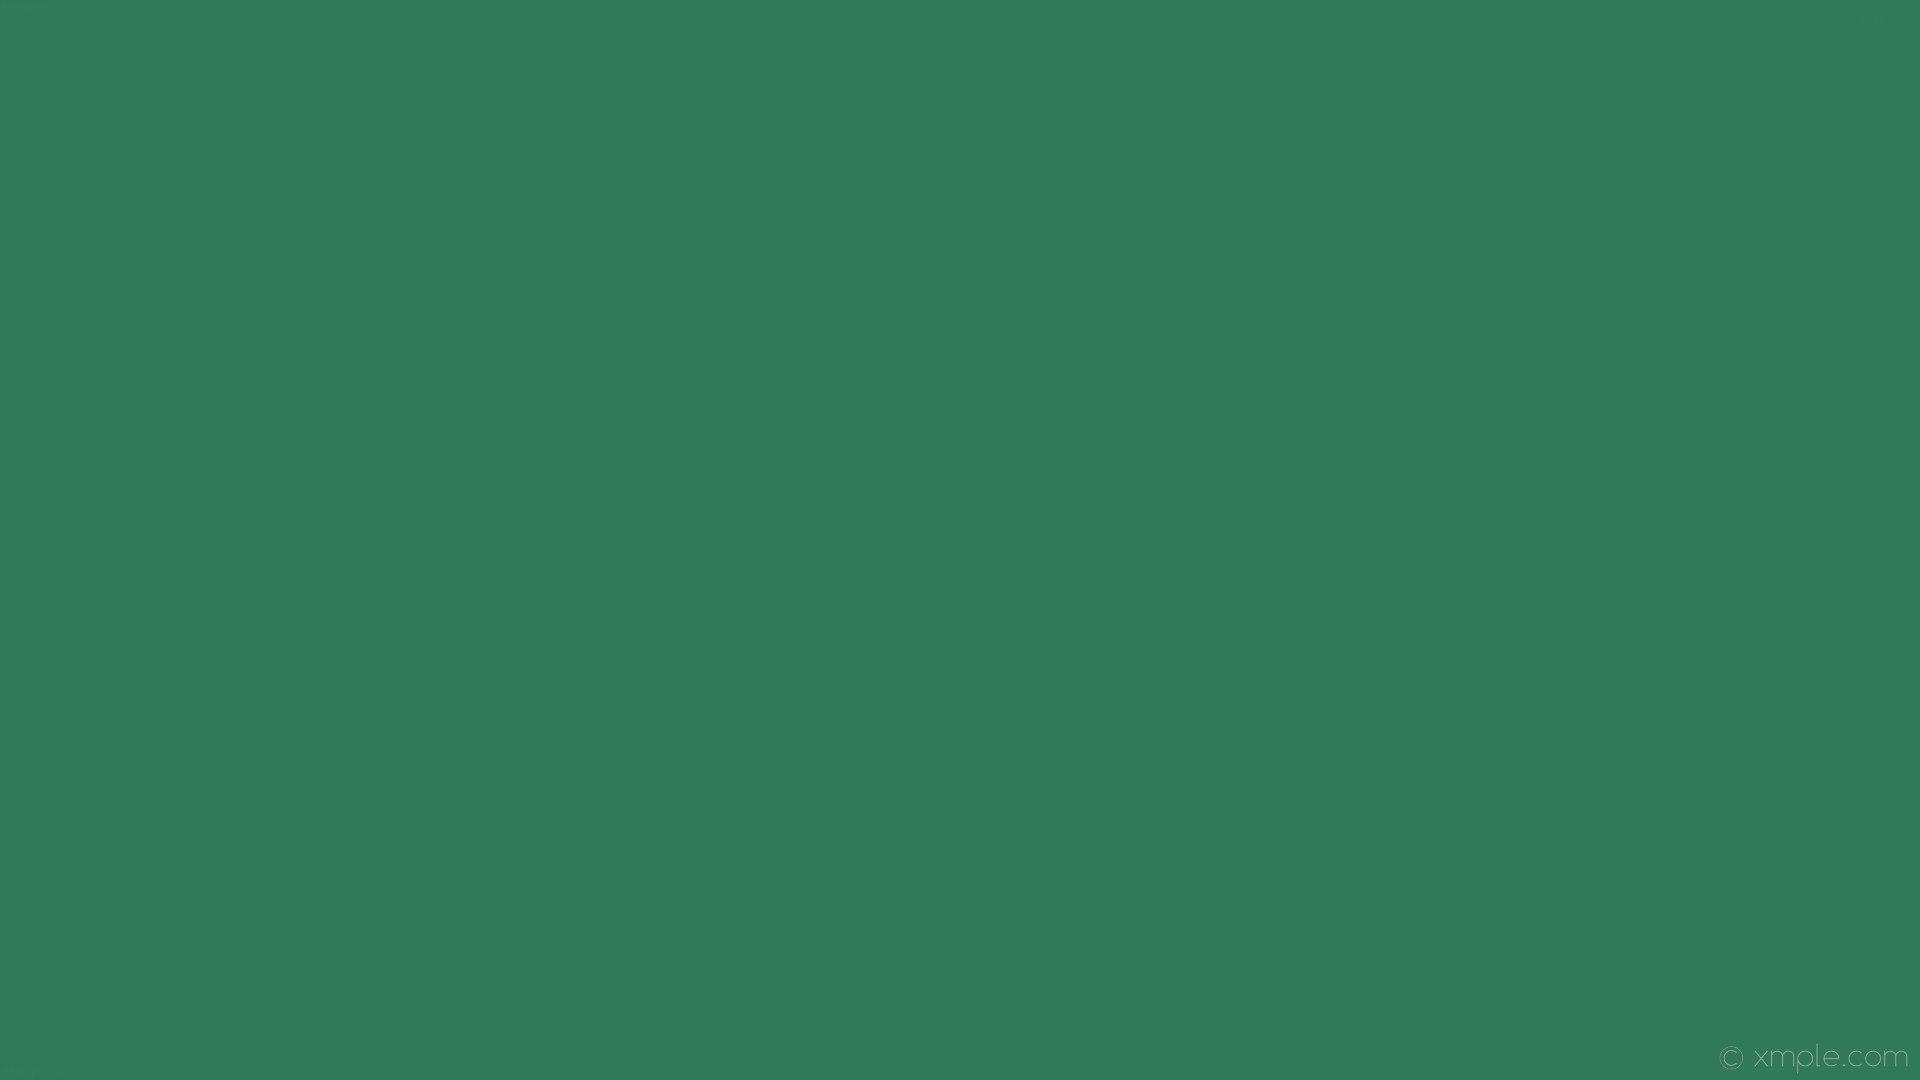 1920x1080 wallpaper plain single one colour turquoise solid color #30795a